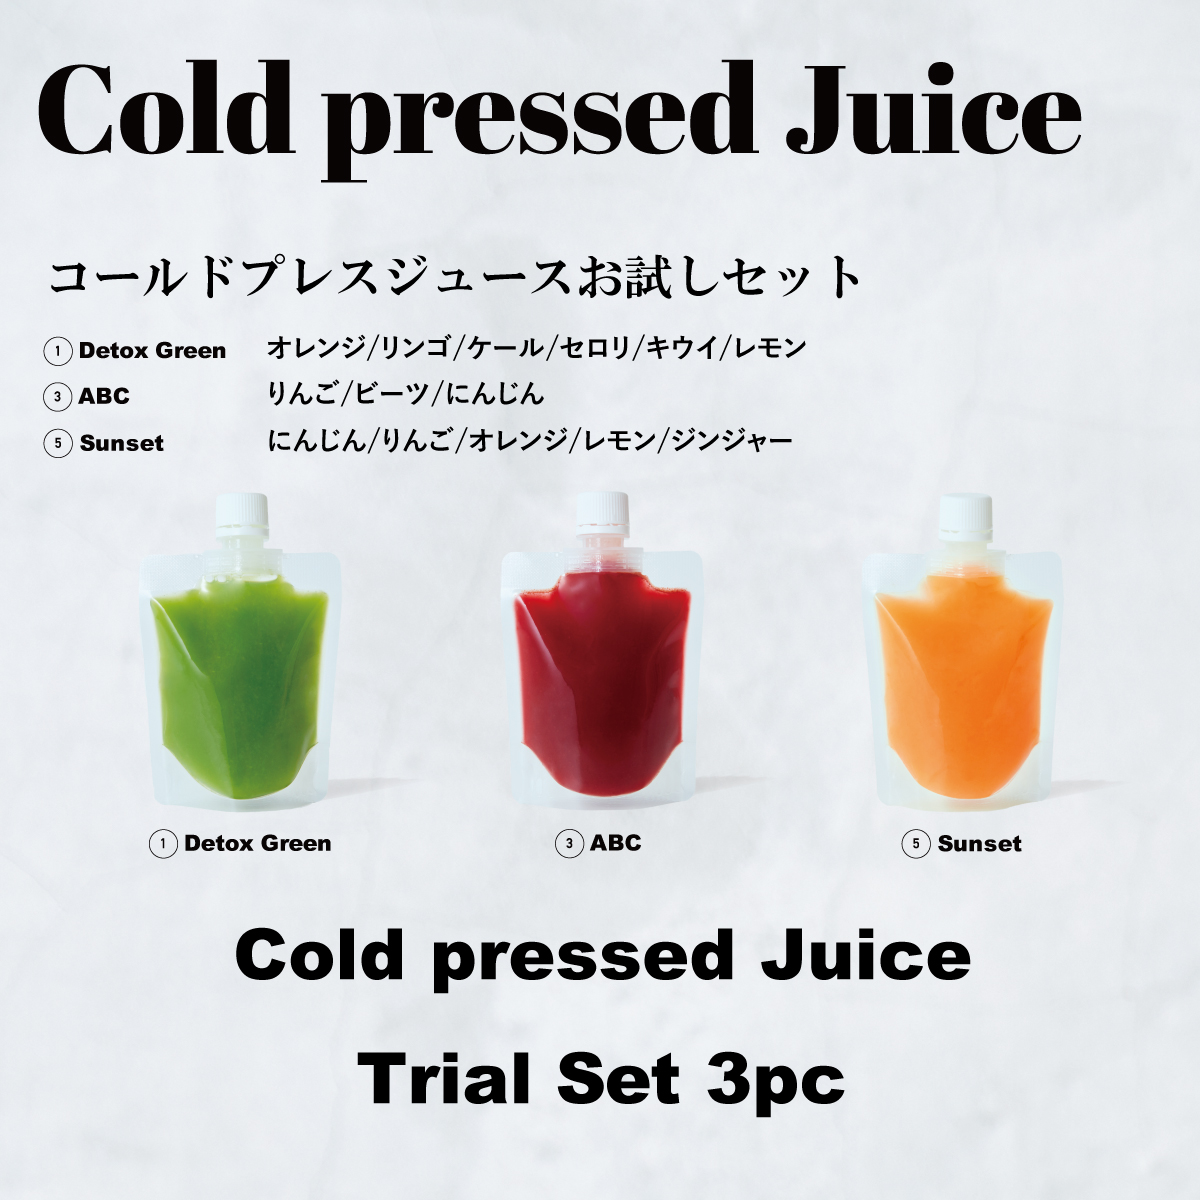 Cold pressed Juice Trial Set コールドプレスジュース お試しセット